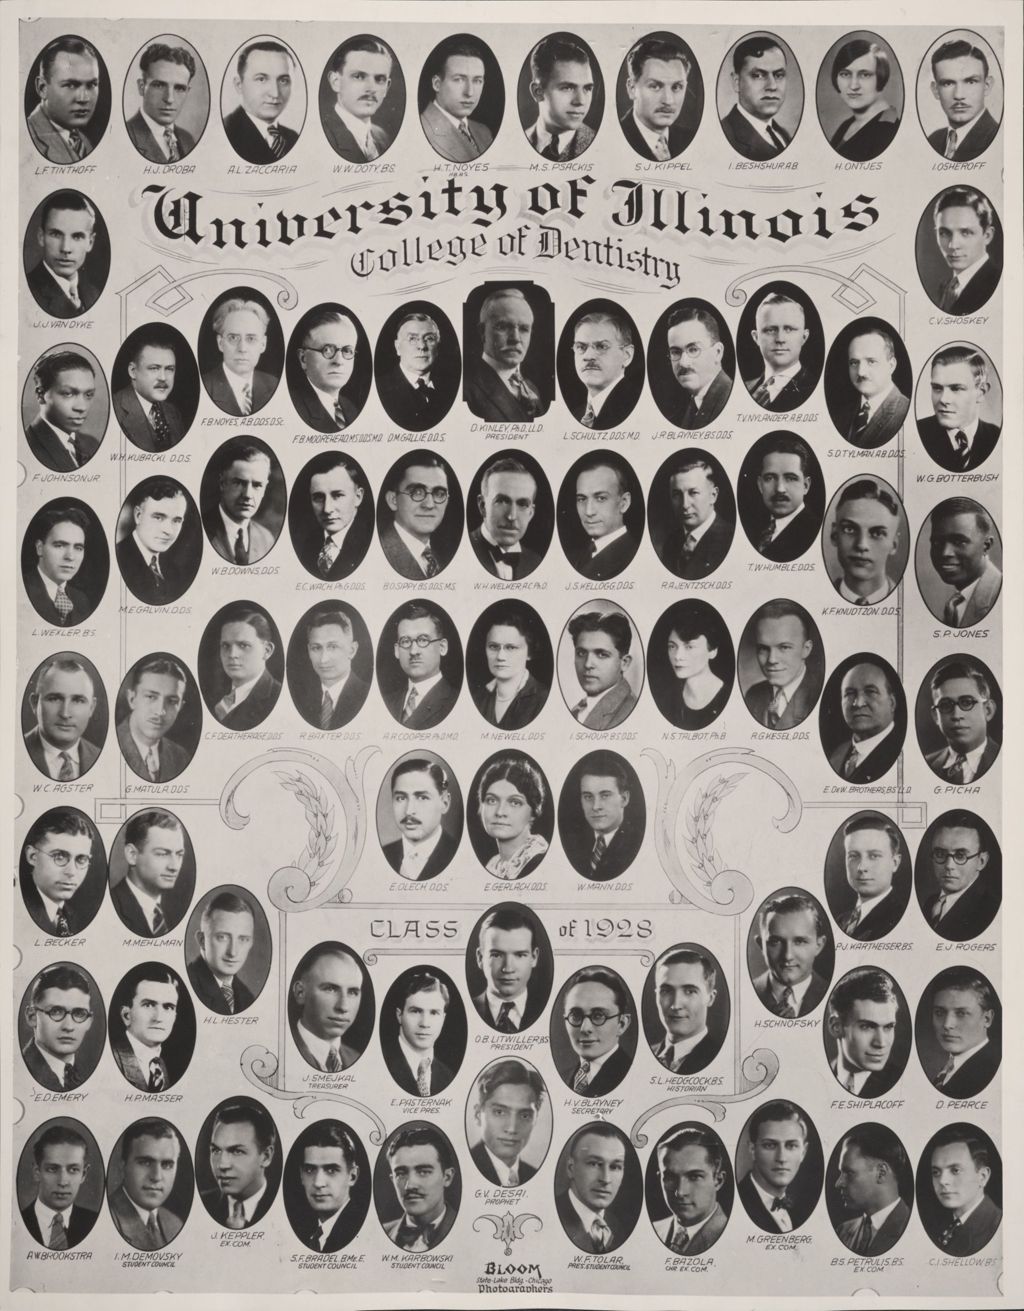 1928 graduating class, University of Illinois College of Dentistry